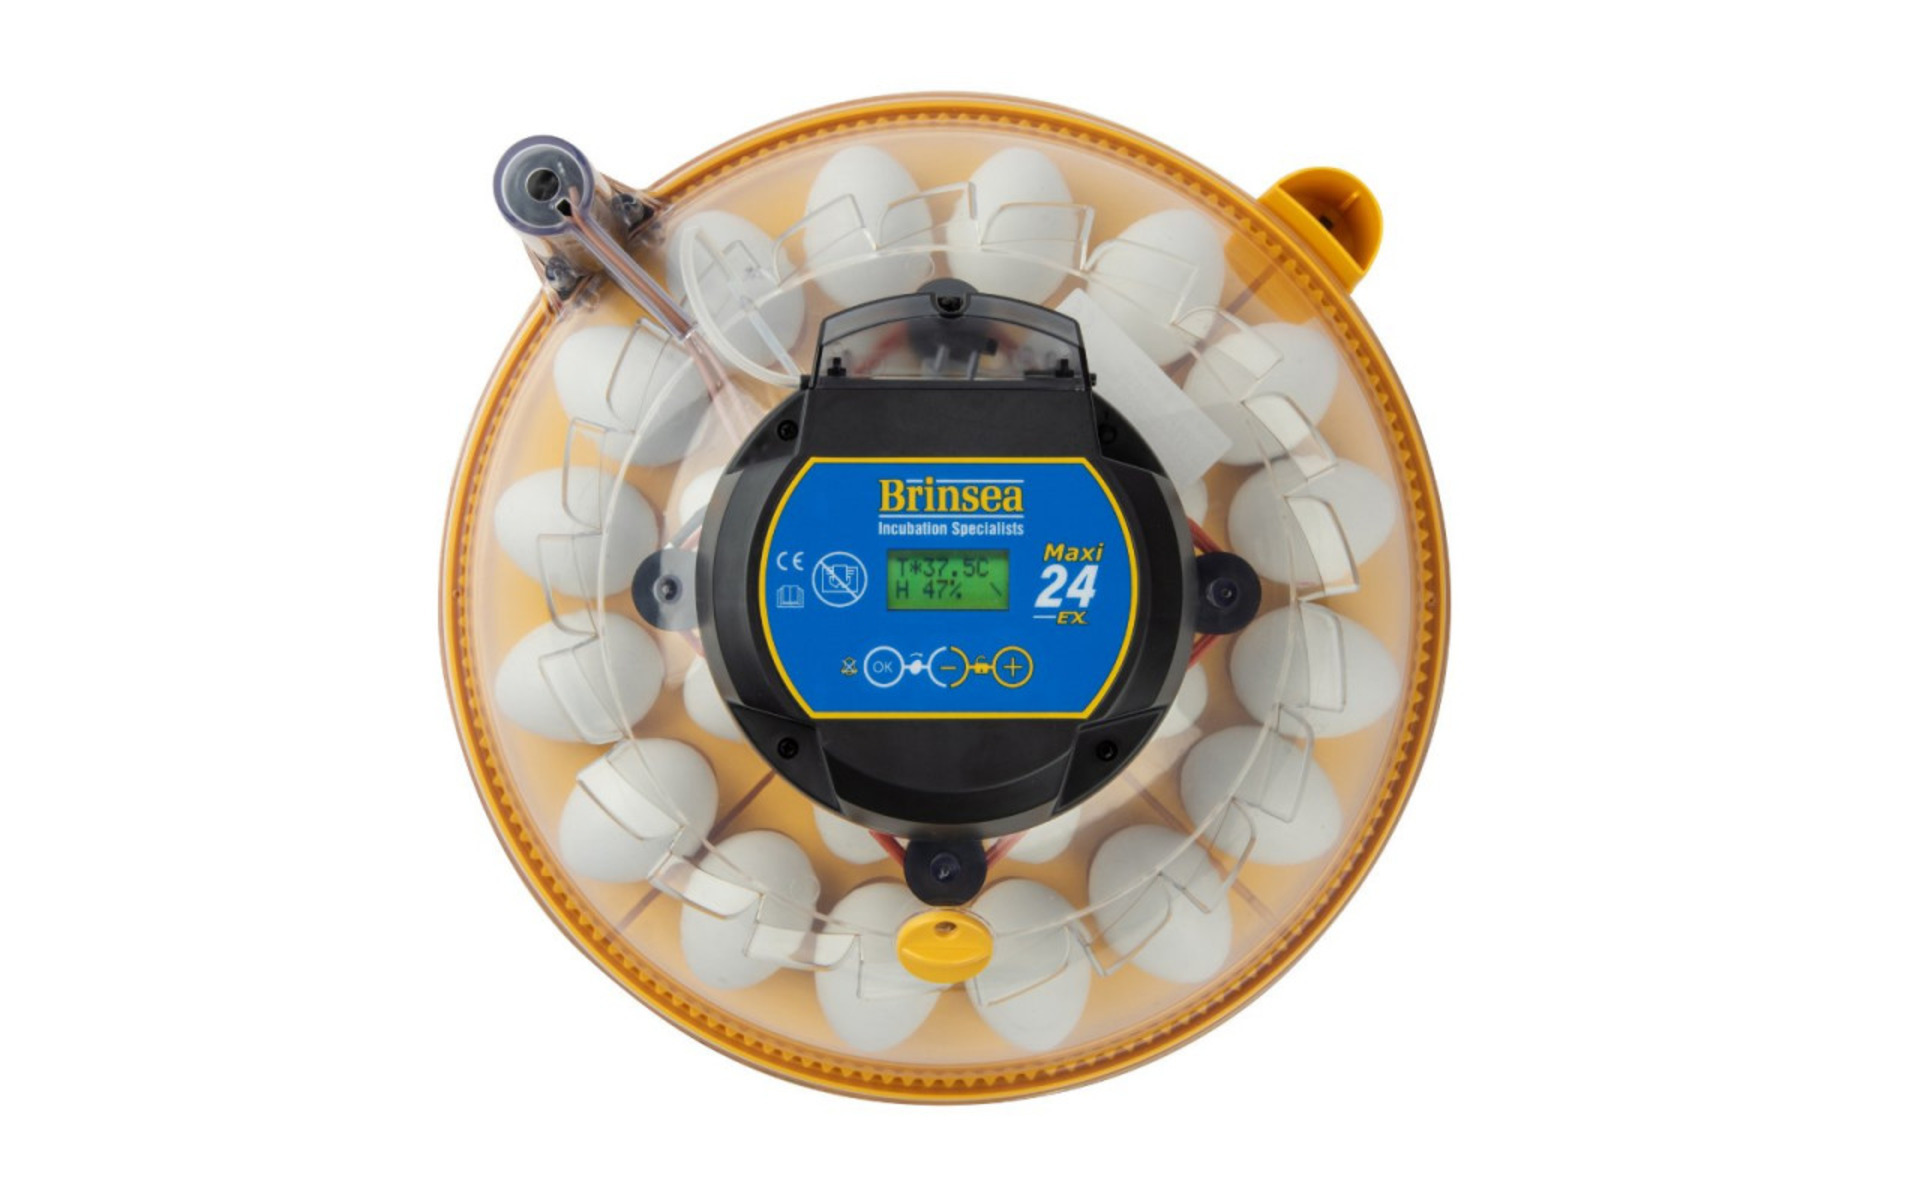 Maxi 24 EX Digital Automatic 24 Egg Incubator